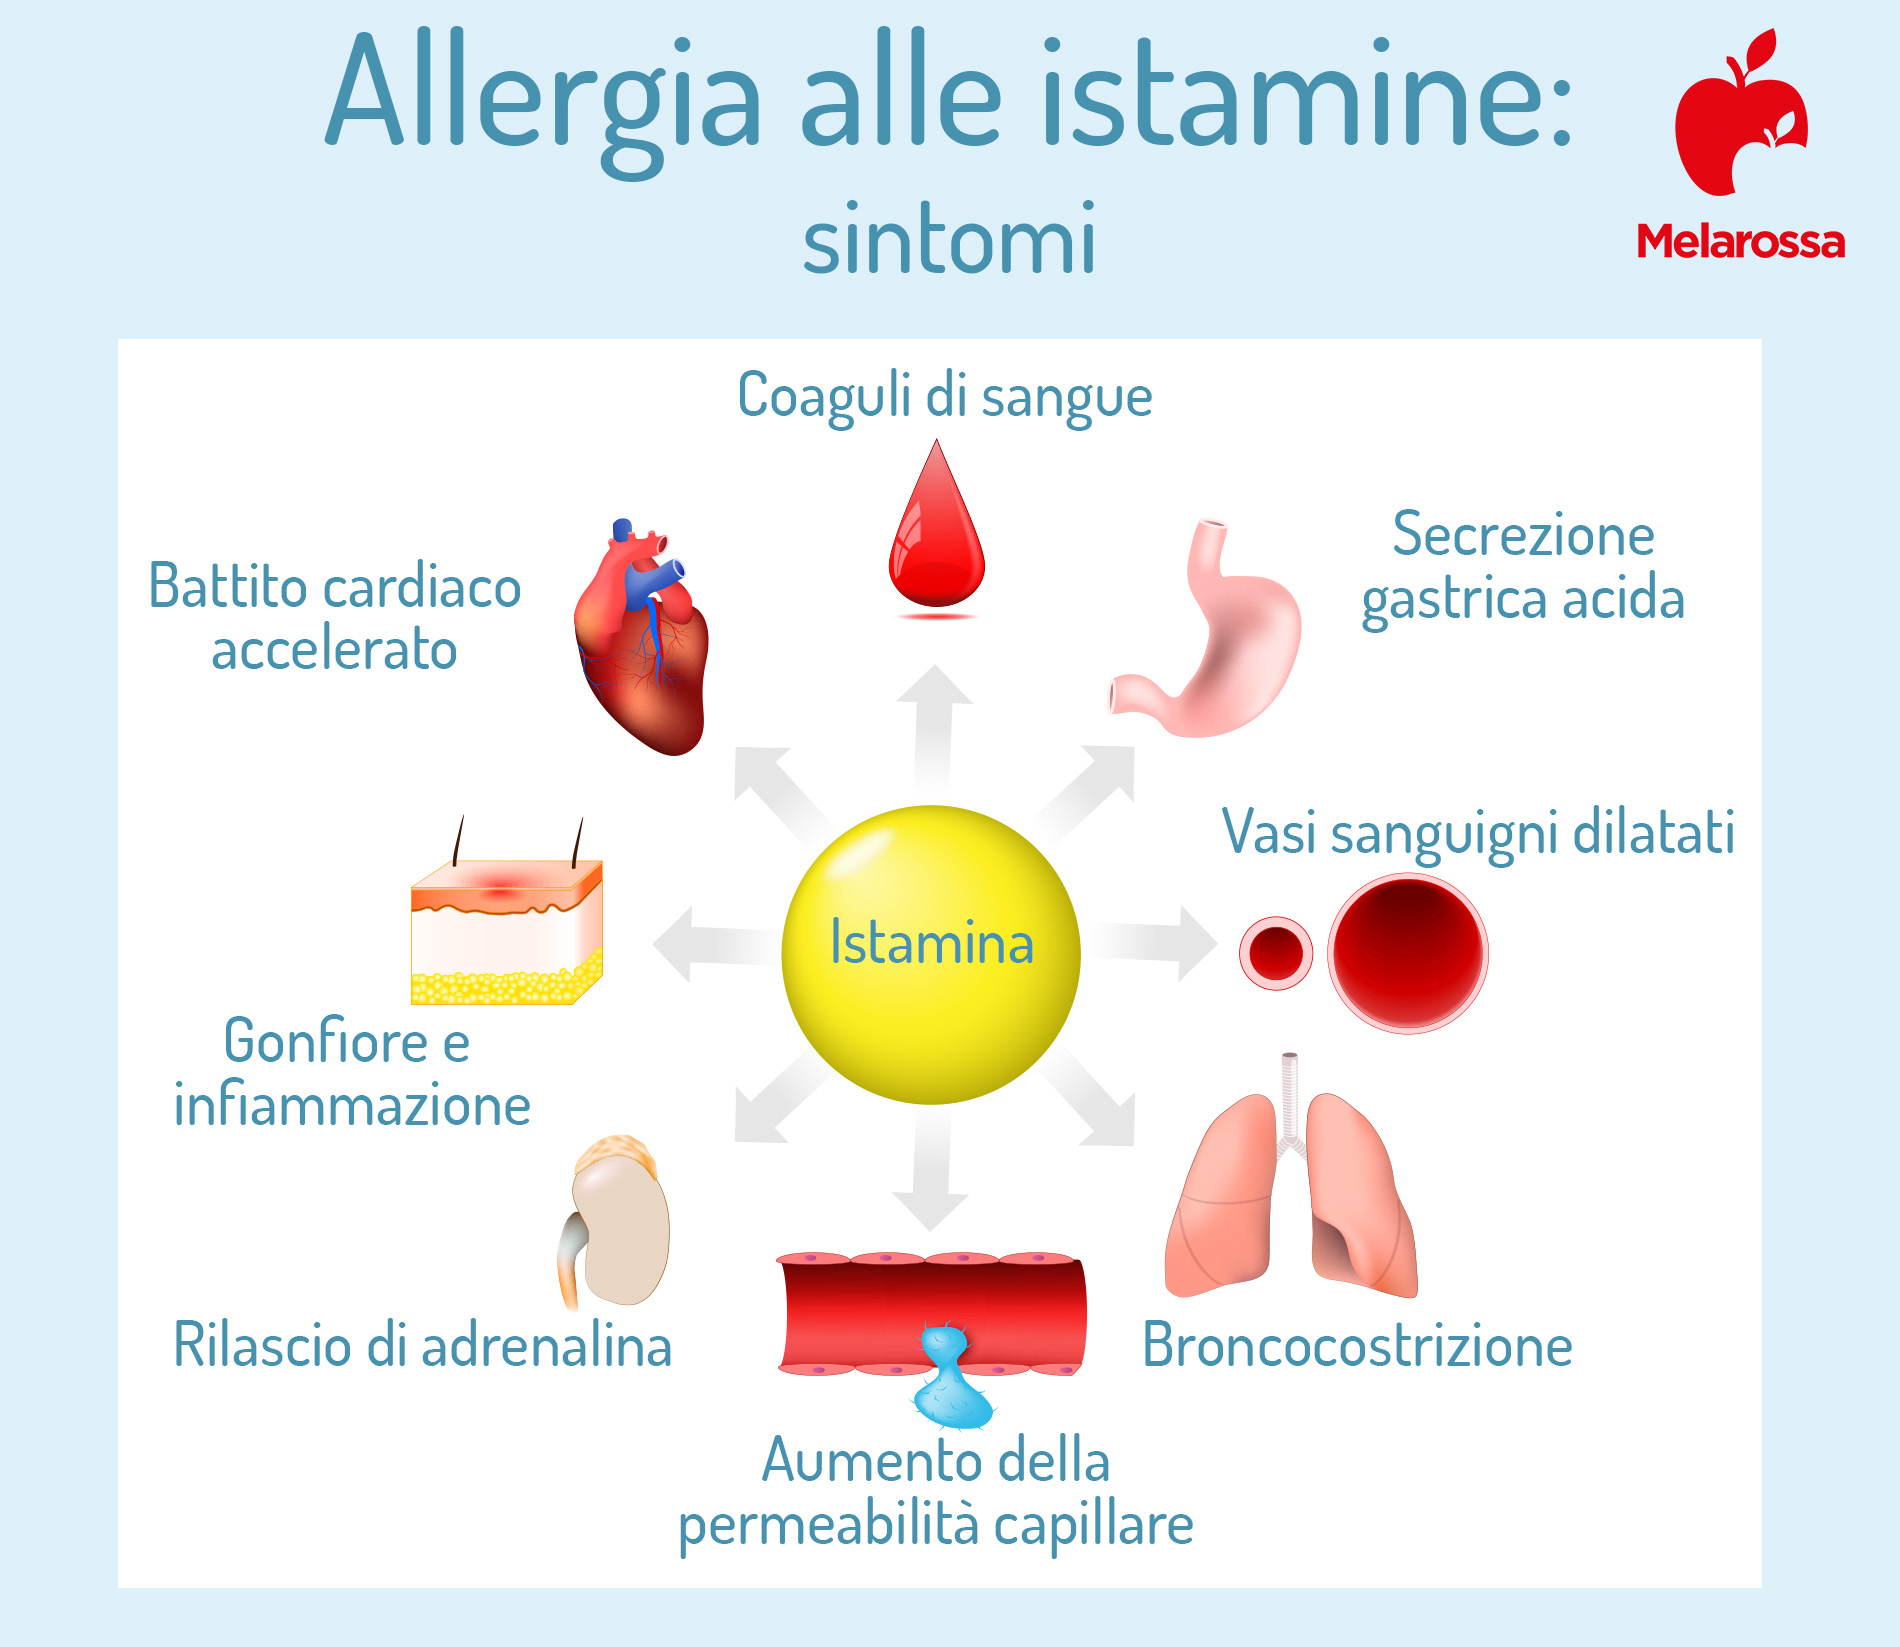 allergia all'istamina: sintomi